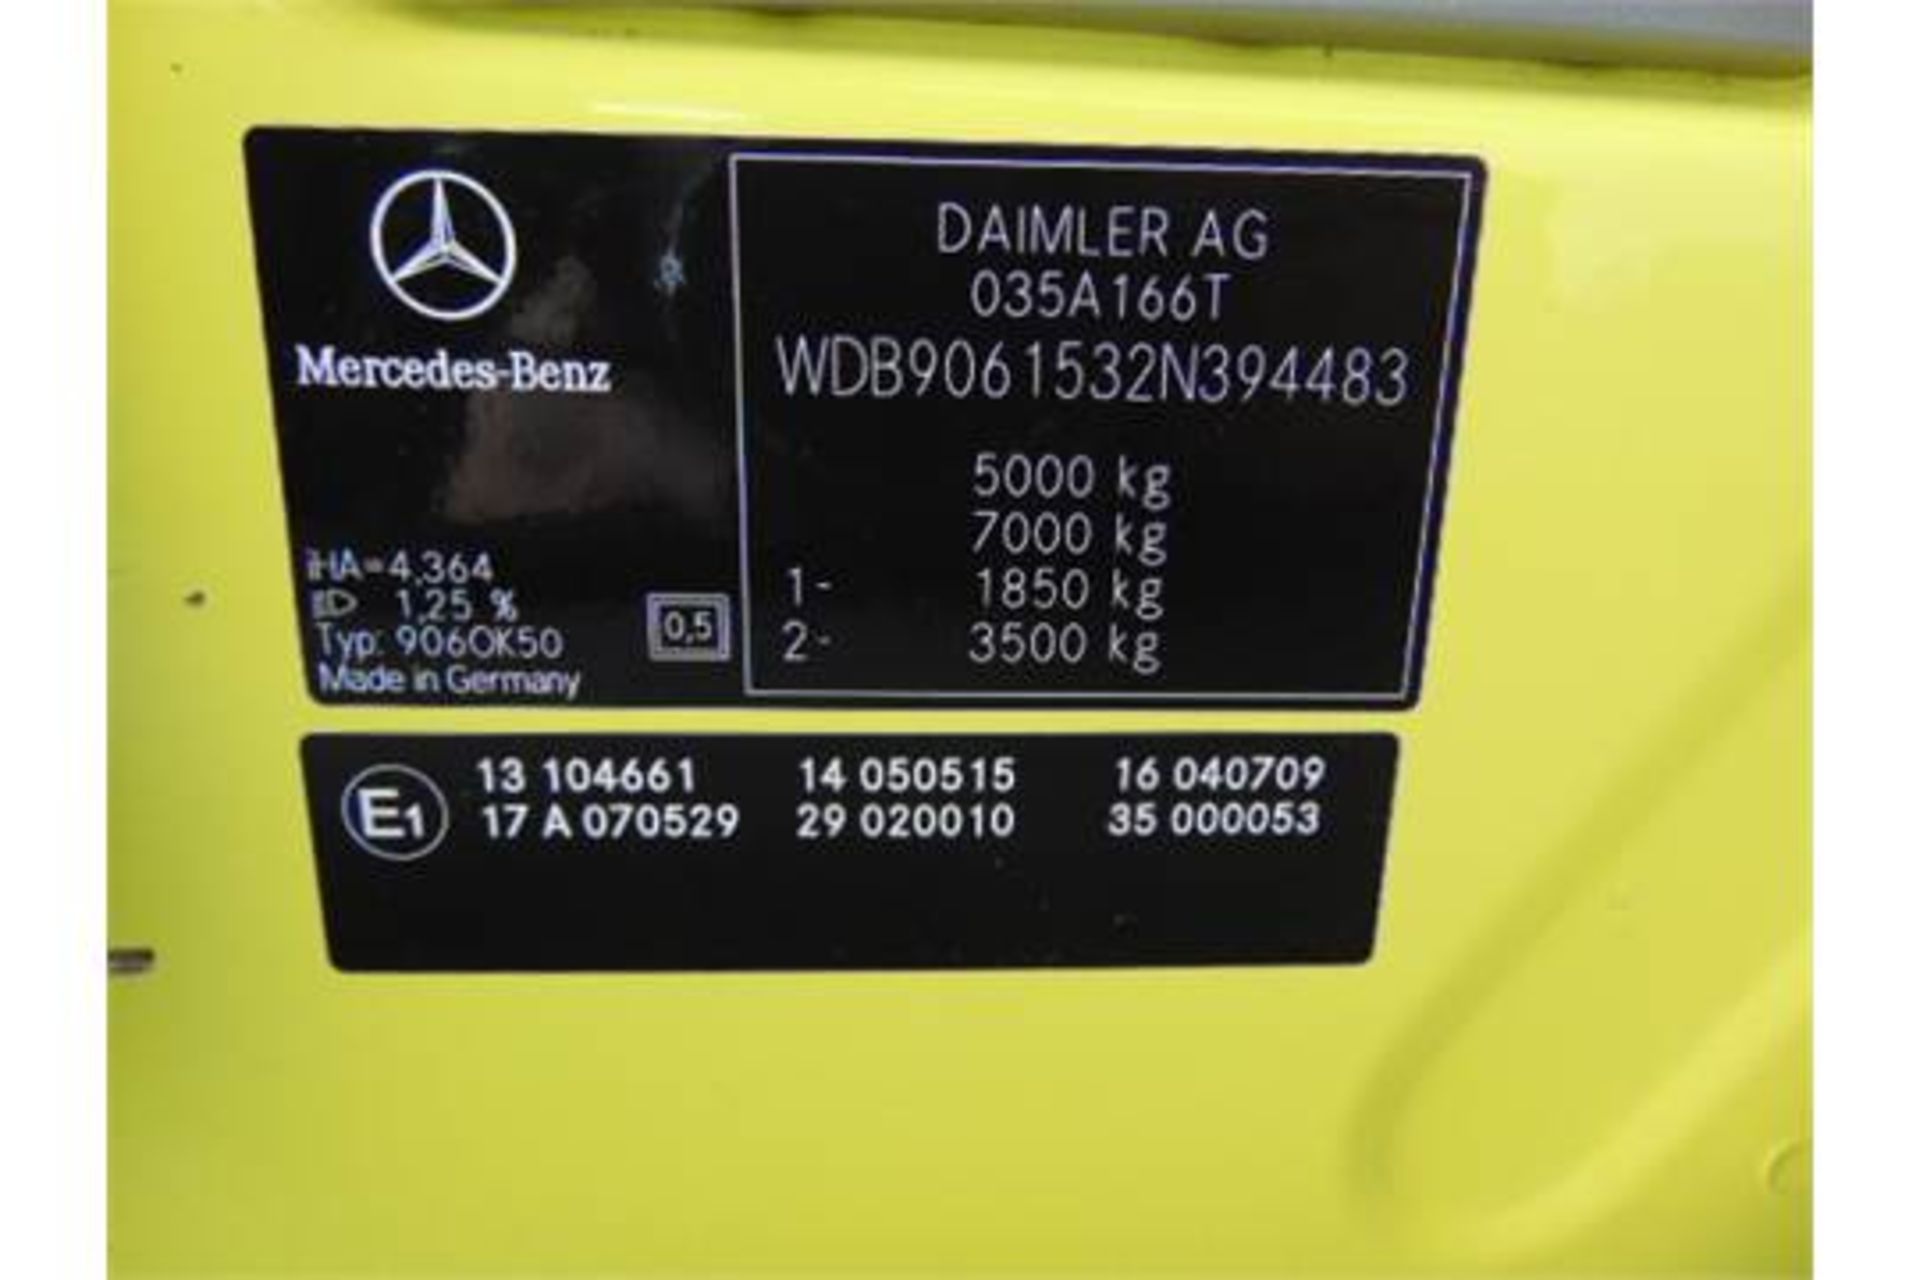 Mercedes Sprinter 515 CDI Turbo diesel ambulance - Image 17 of 18